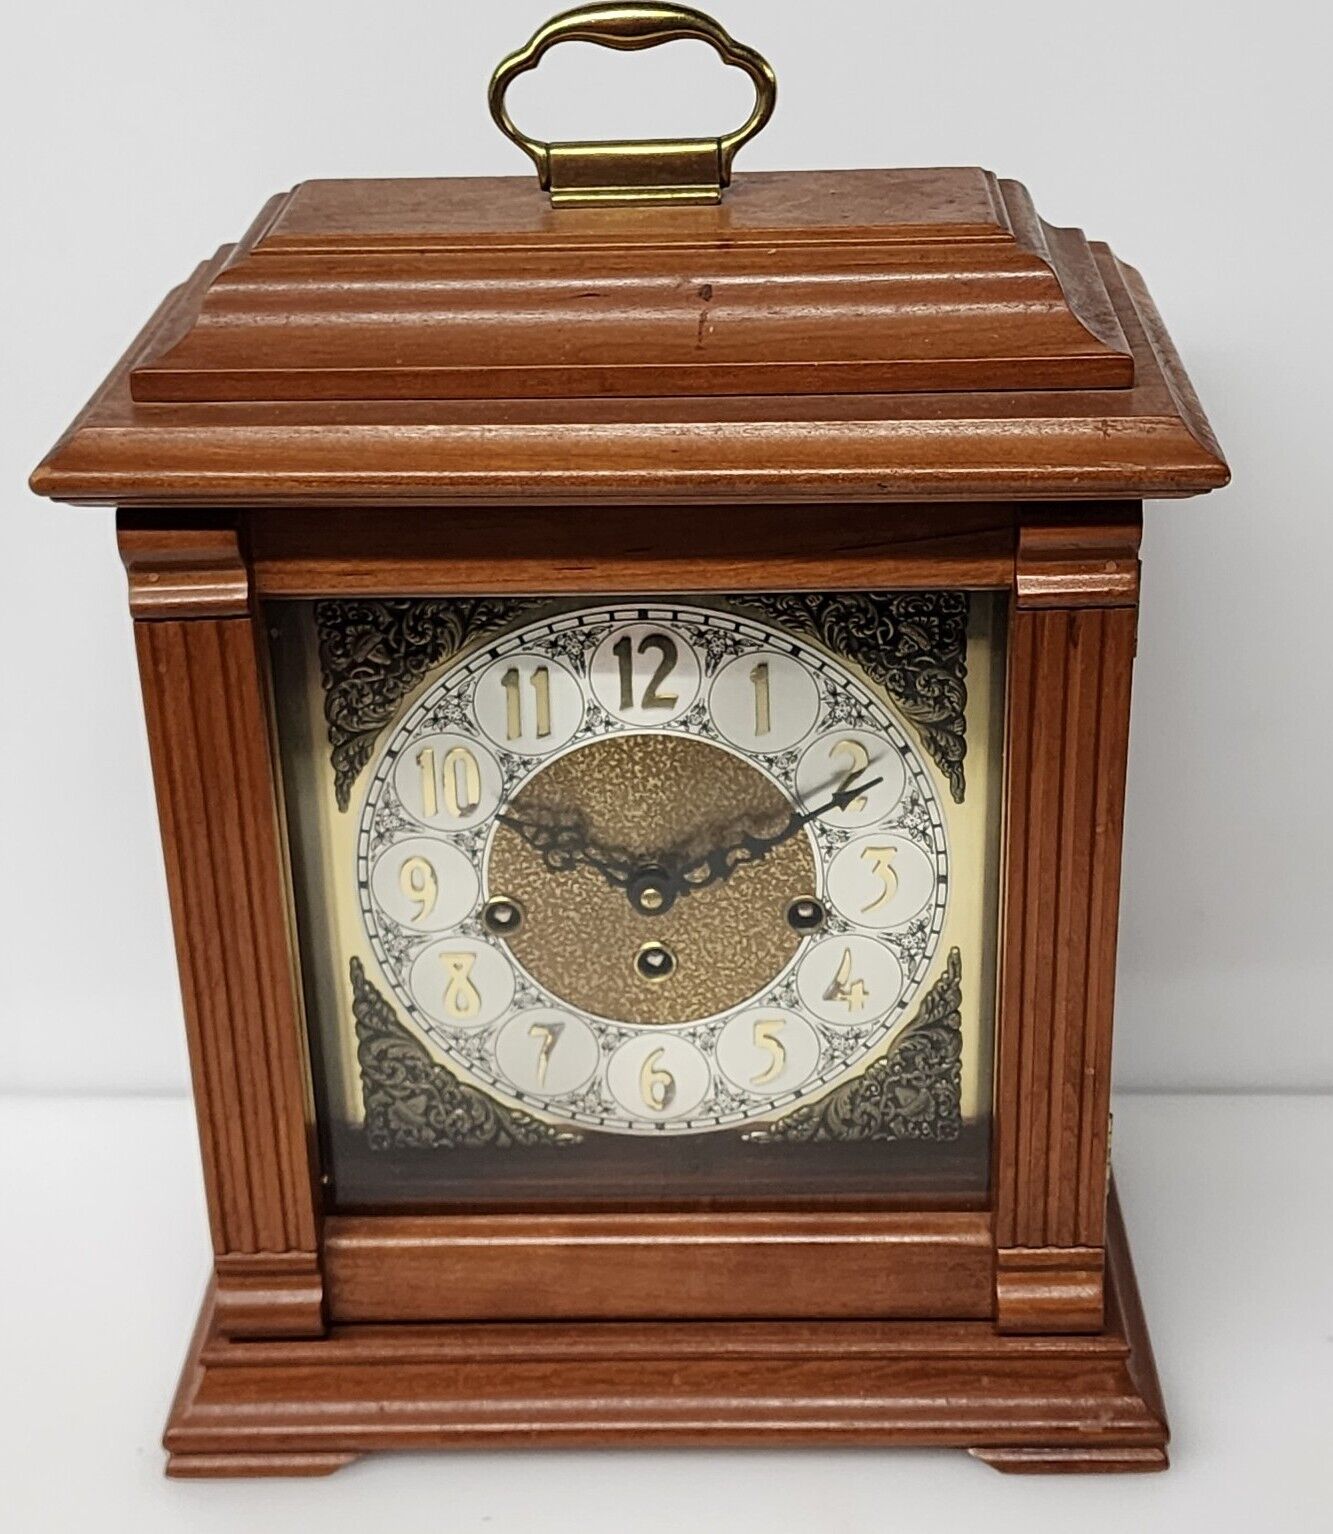 Emperor Wood Chime Mantle Shelf Clock 3 Key Made West Germany 341-020 0 Jewels